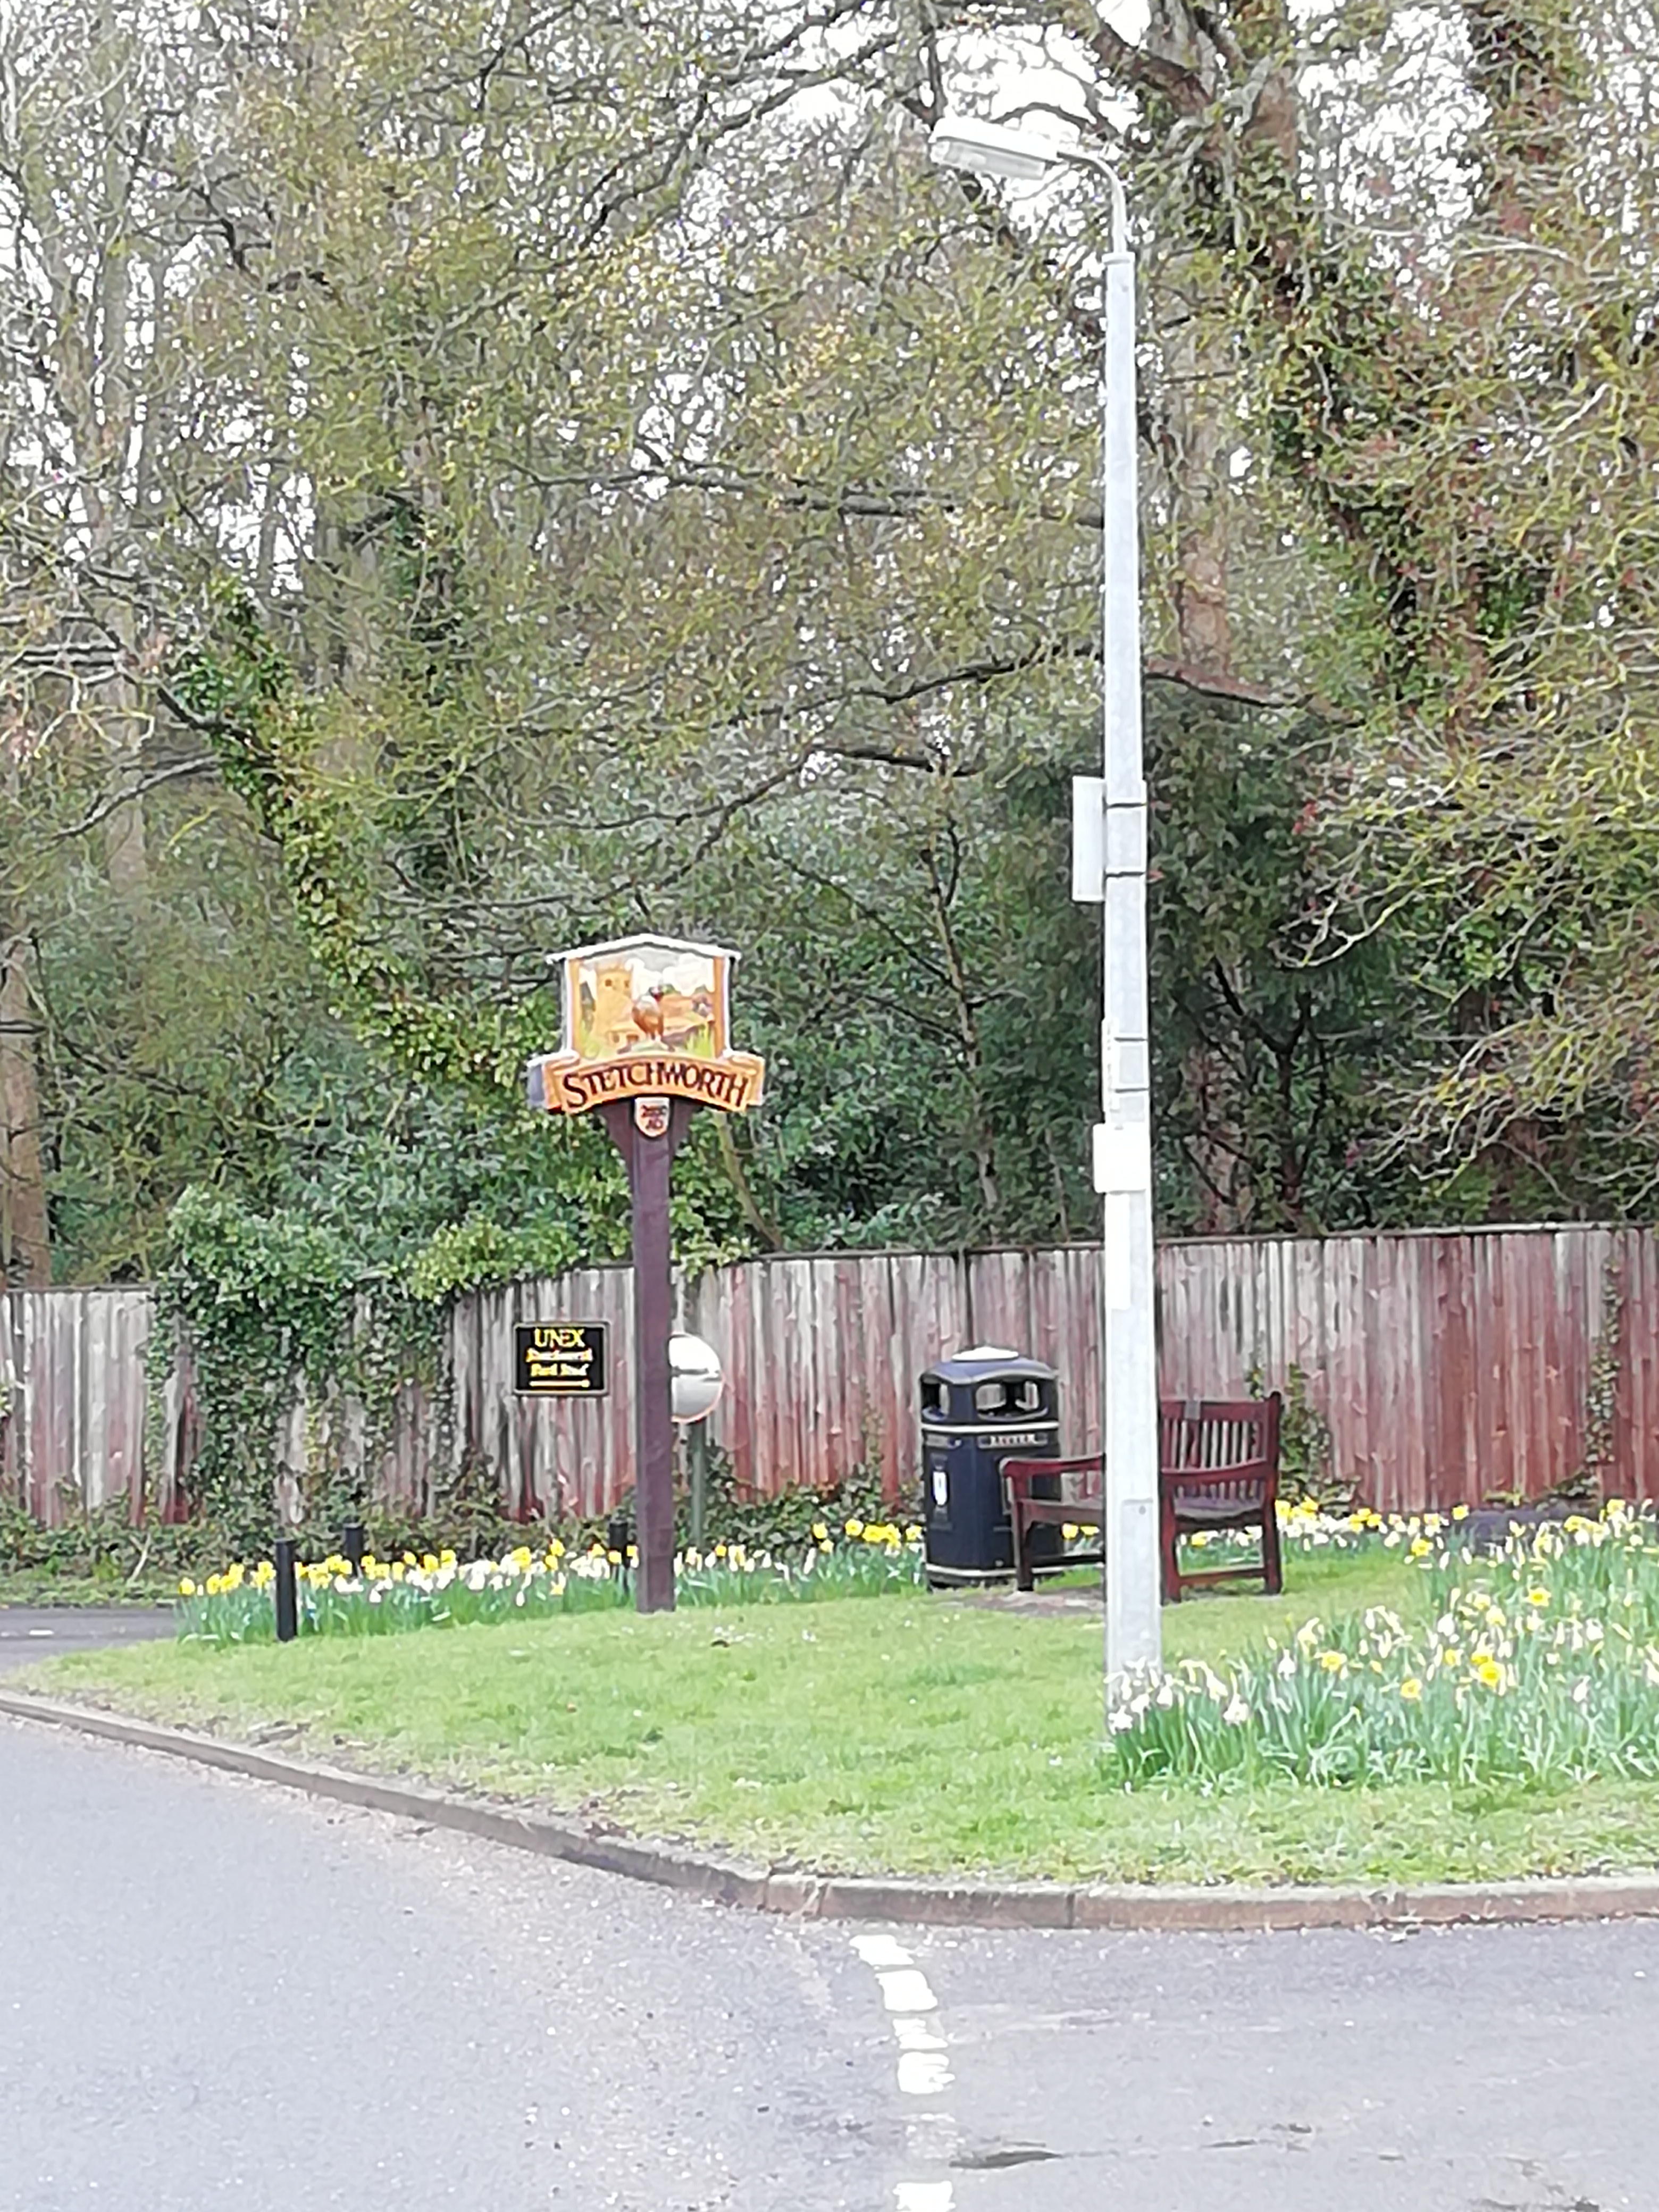 Village green showing village sign, bench & litter bin